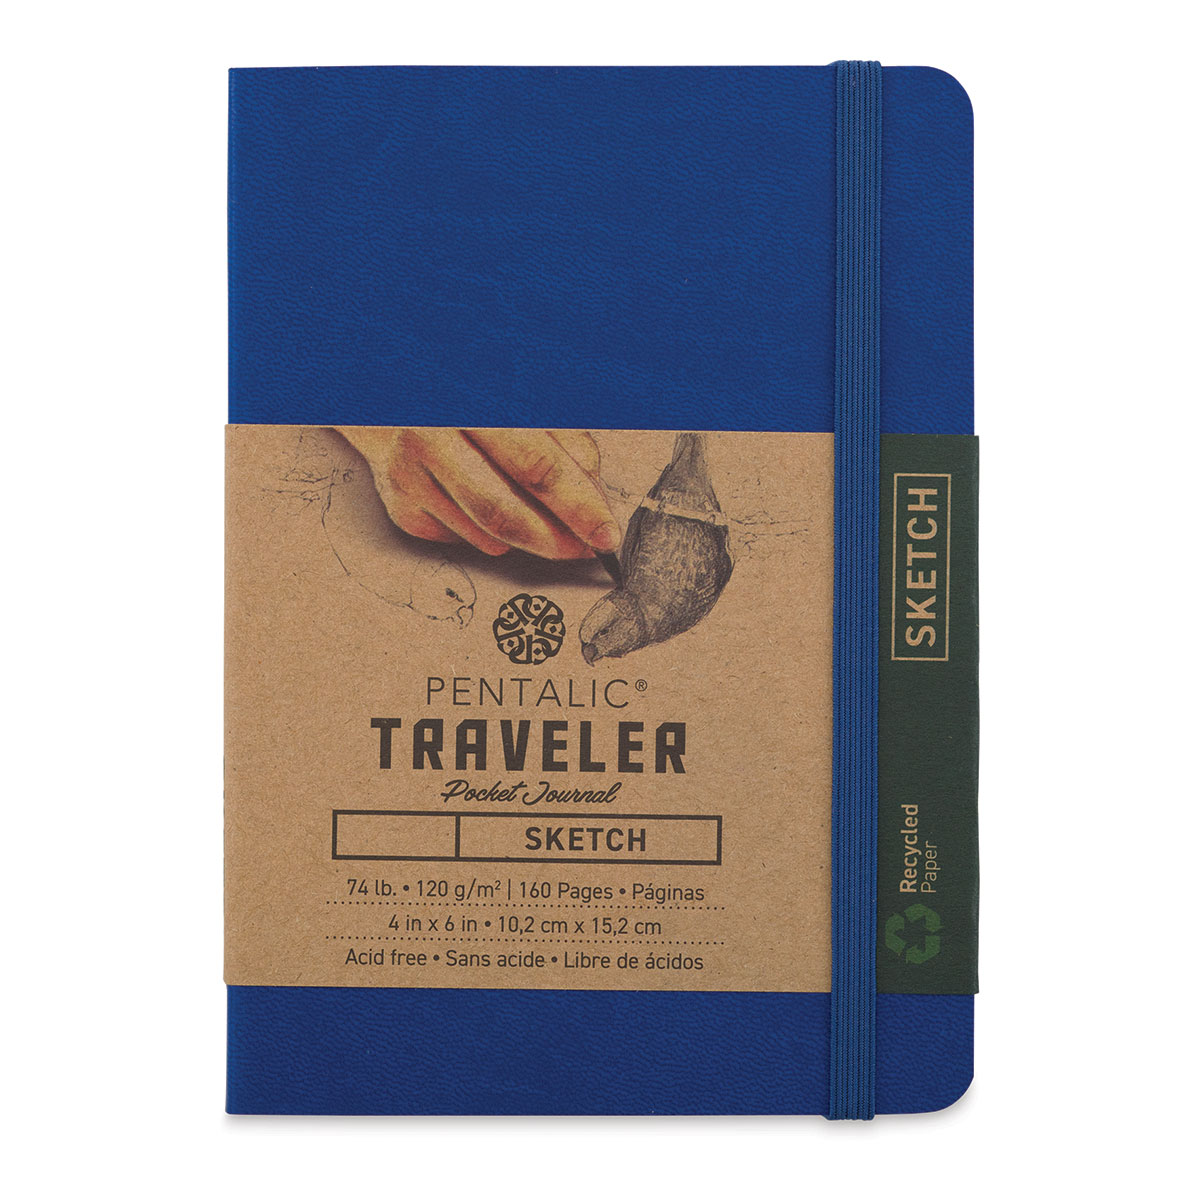 Pentalic Recycled Traveler's Sketchbook - 5-7/8 inch x 4-1/8 inch, Metallic Gold